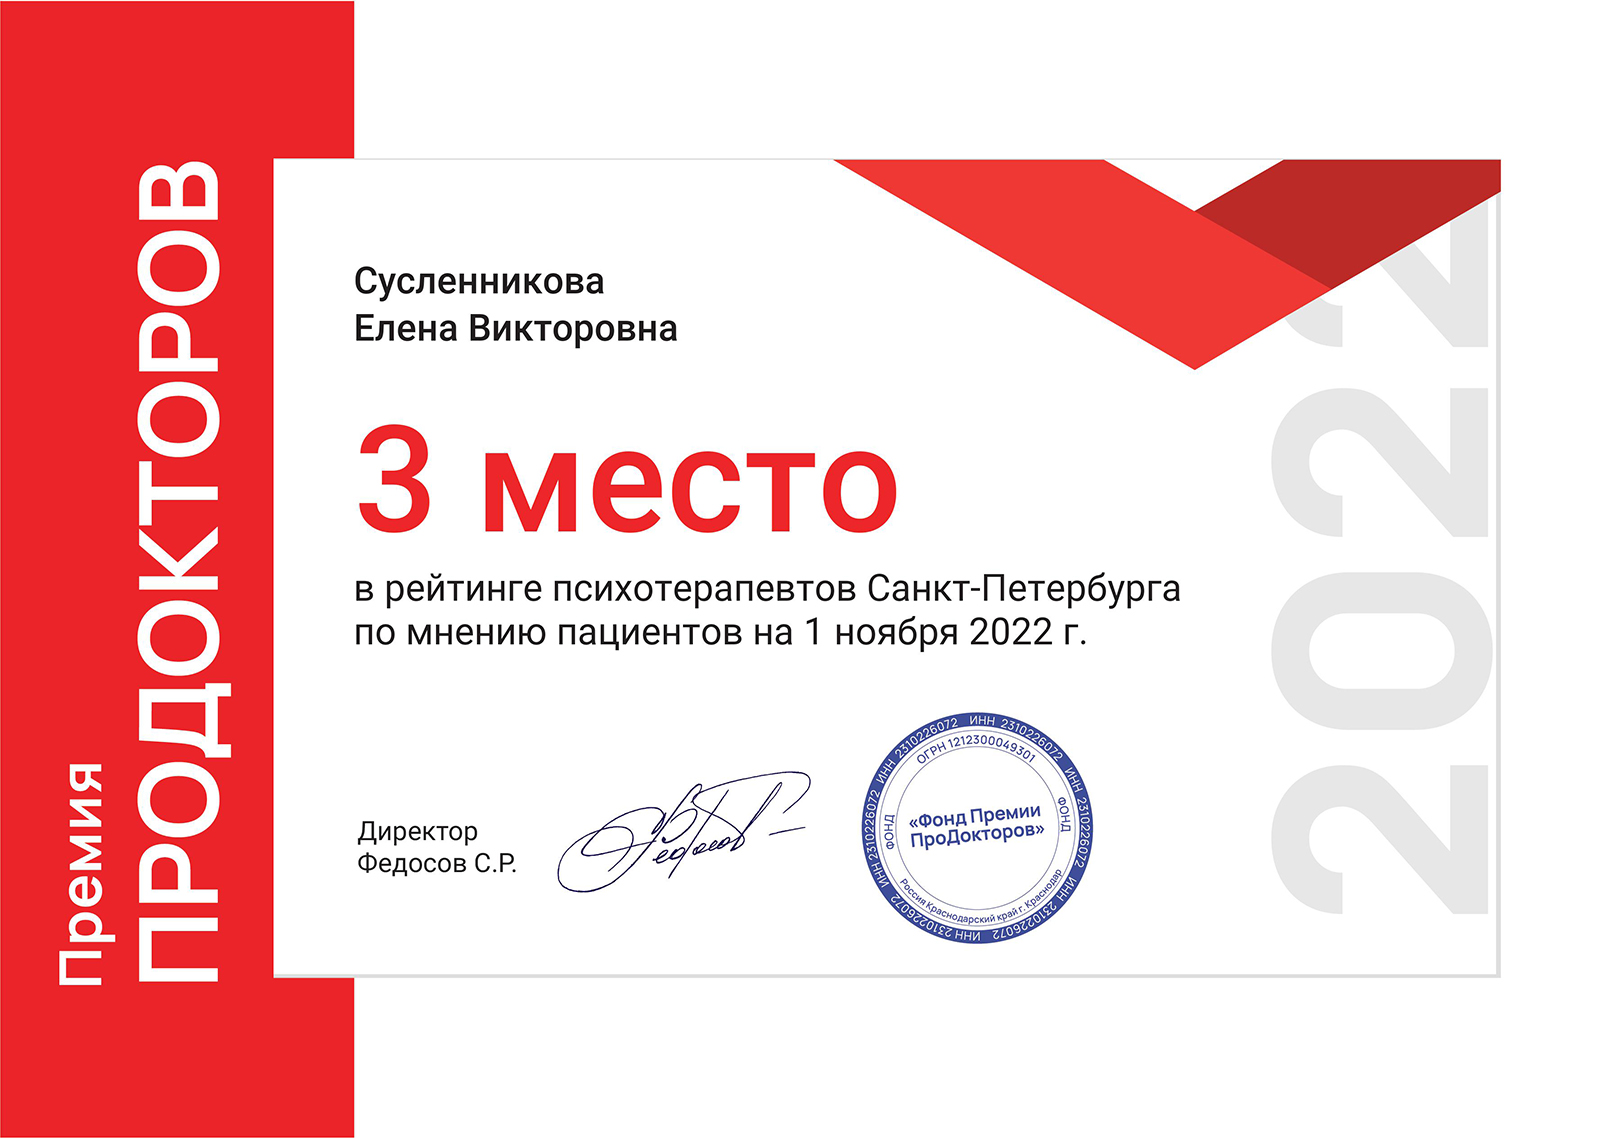 Премия ПроДокторов 2022